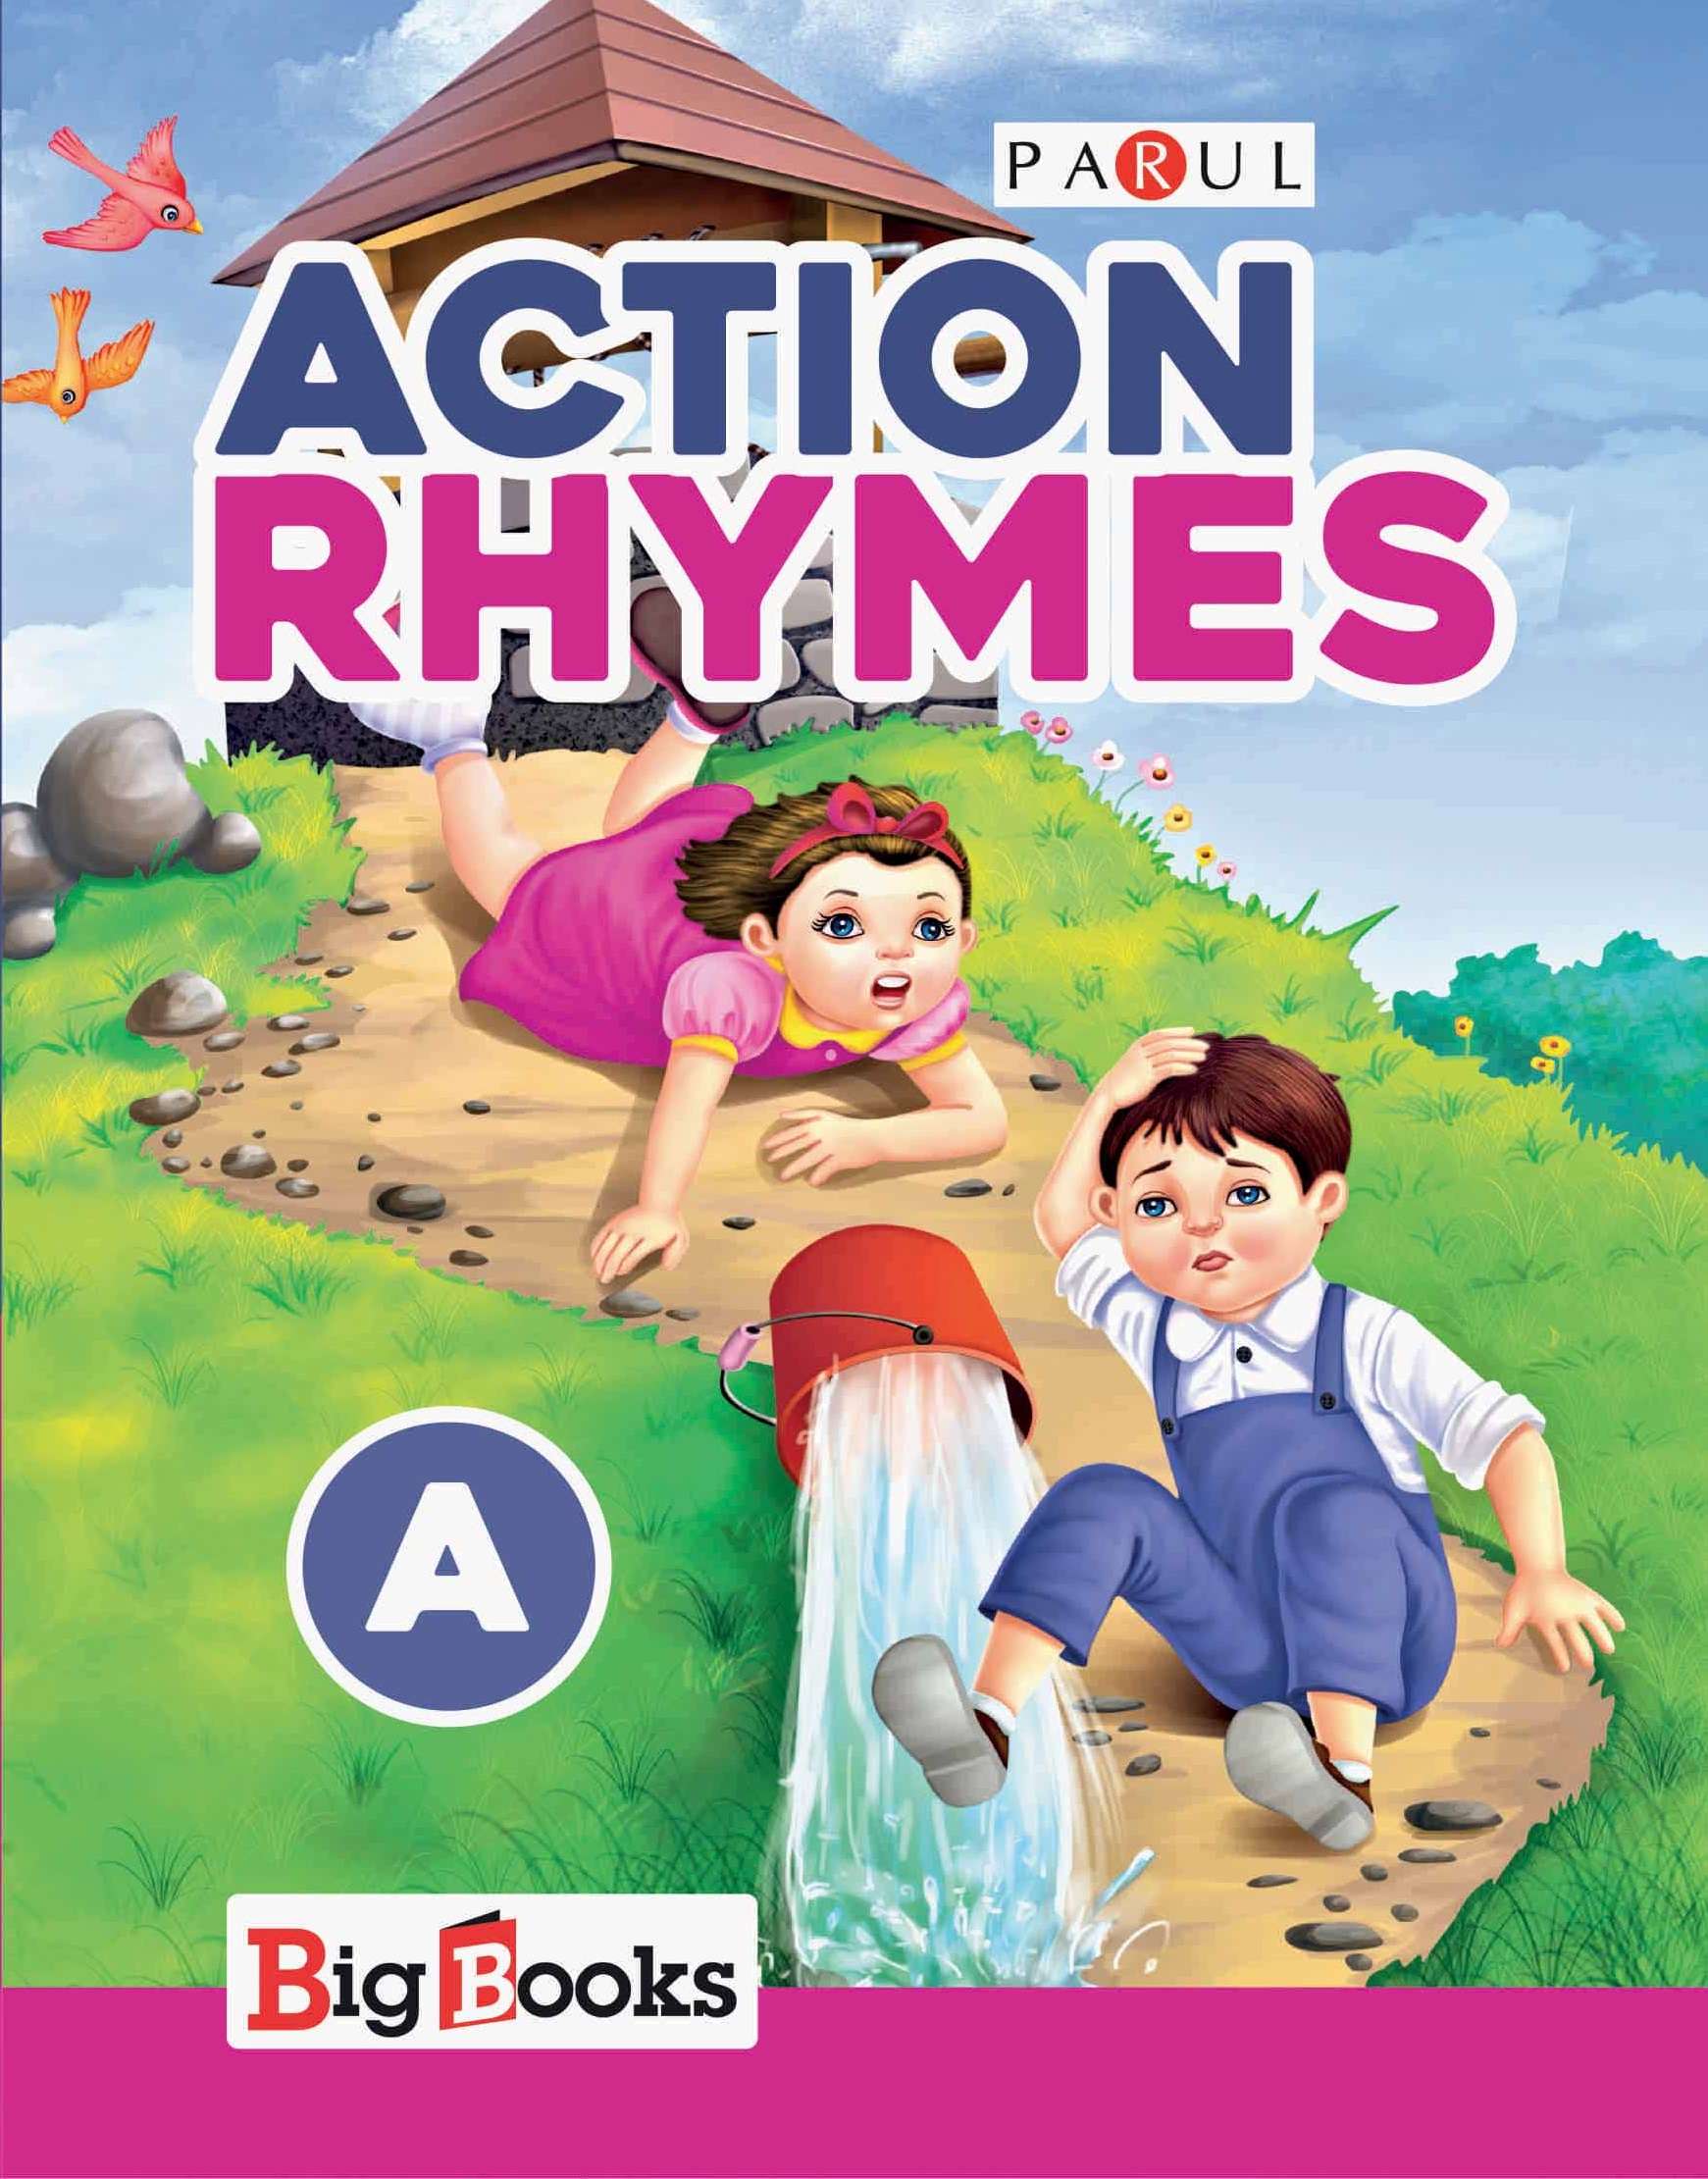 Buy Rhymes book for 1